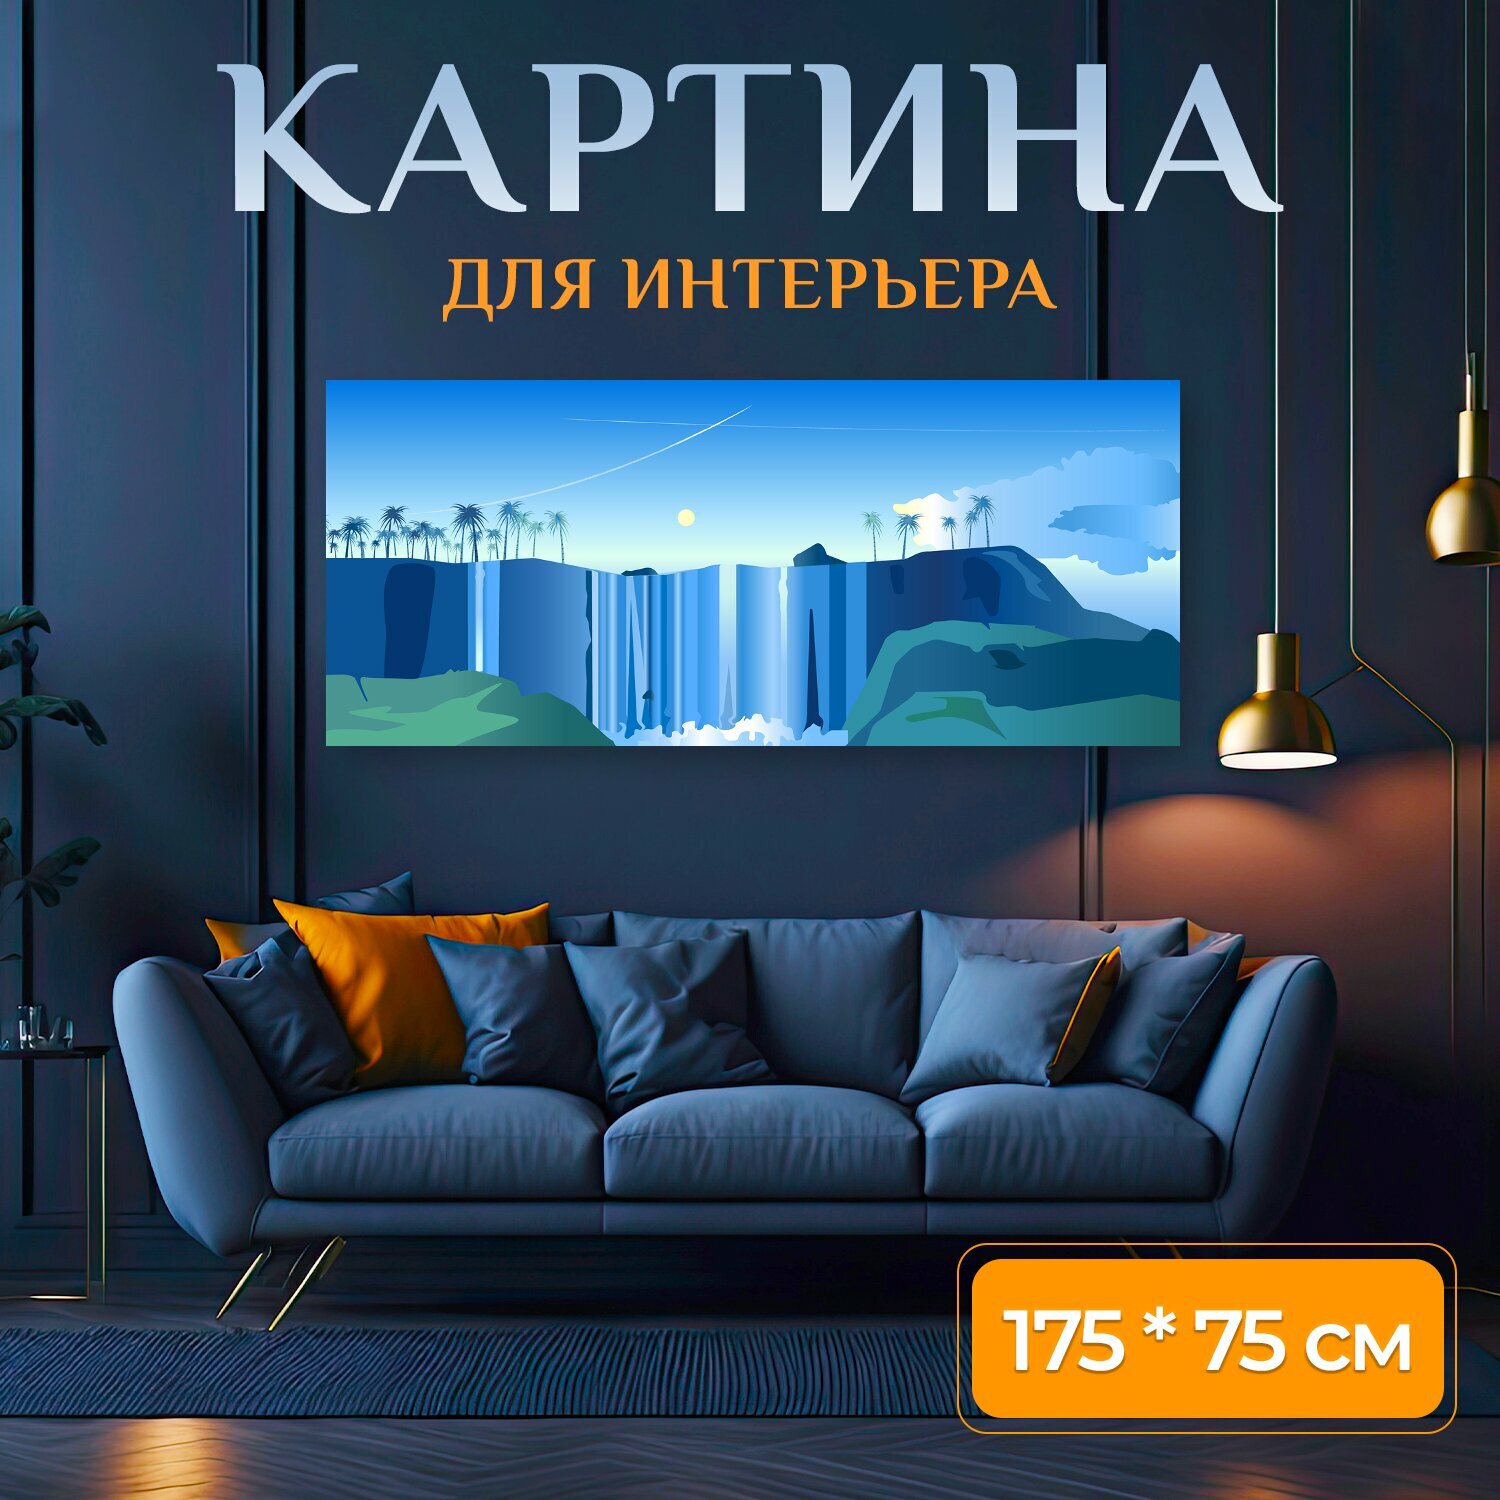 Картина на холсте "Водопады, водопад, панорама" на подрамнике 175х75 см. для интерьера